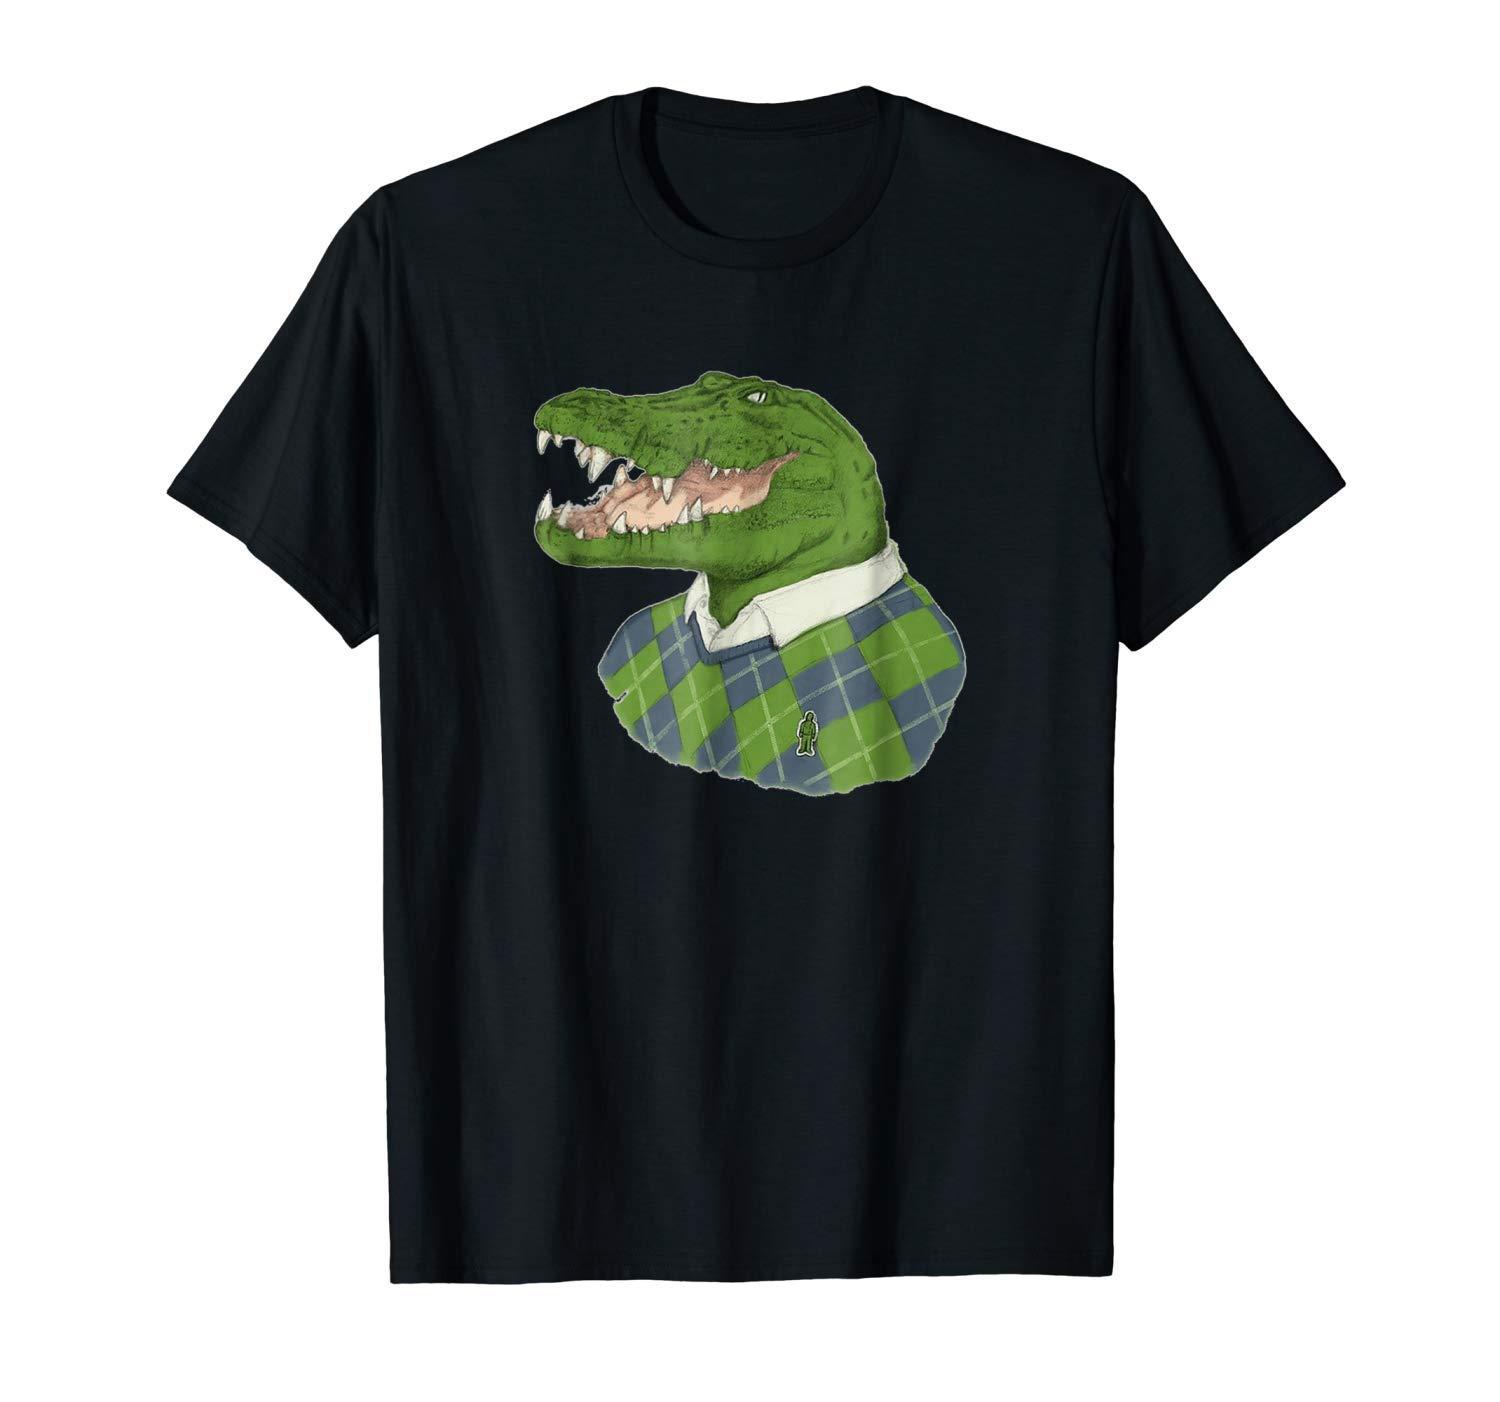 Clothing Brand with Alligator Logo - Alligator Crocodile T Shirt Cute Zoo Animal Jungle T Shirt Brand ...